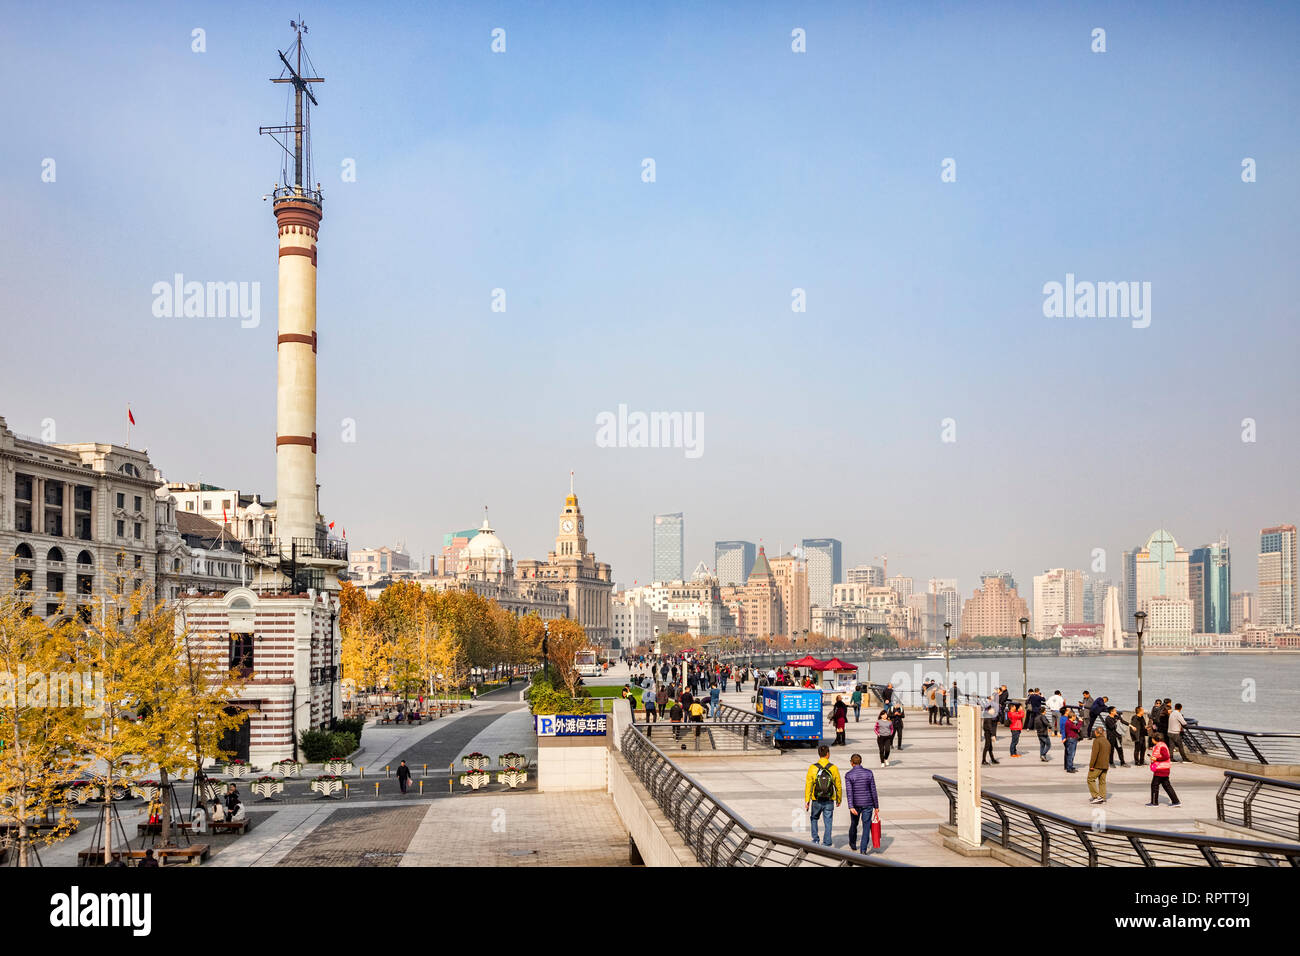 29 Novembre 2018: Shanghai in Cina - Visitatori camminando sul Bund, accanto al Fiume Huangpu, Shanghai. Foto Stock